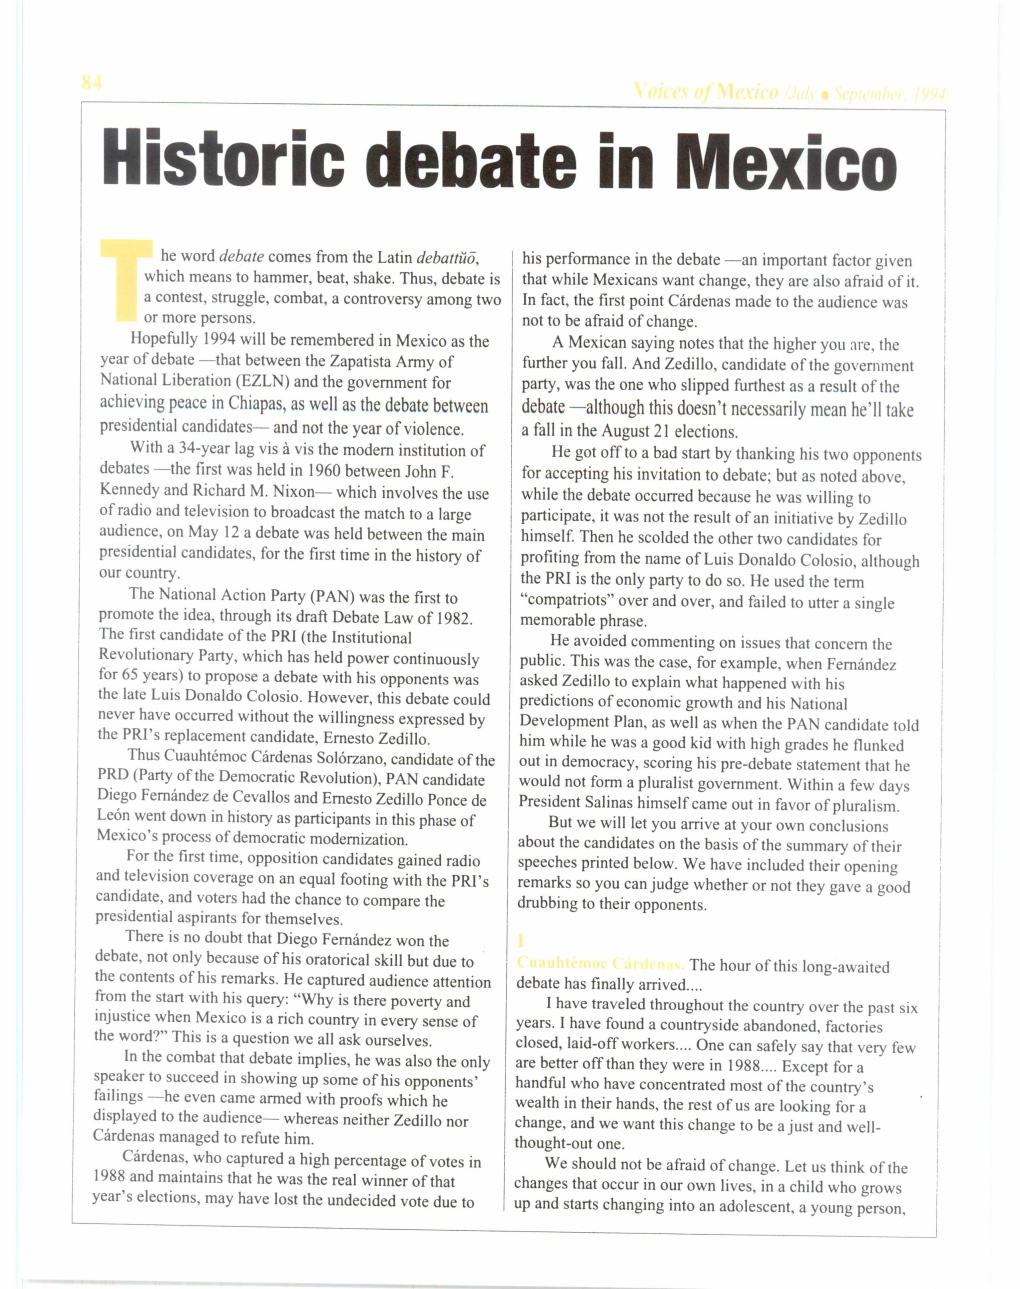 Historic Debate in Mexico